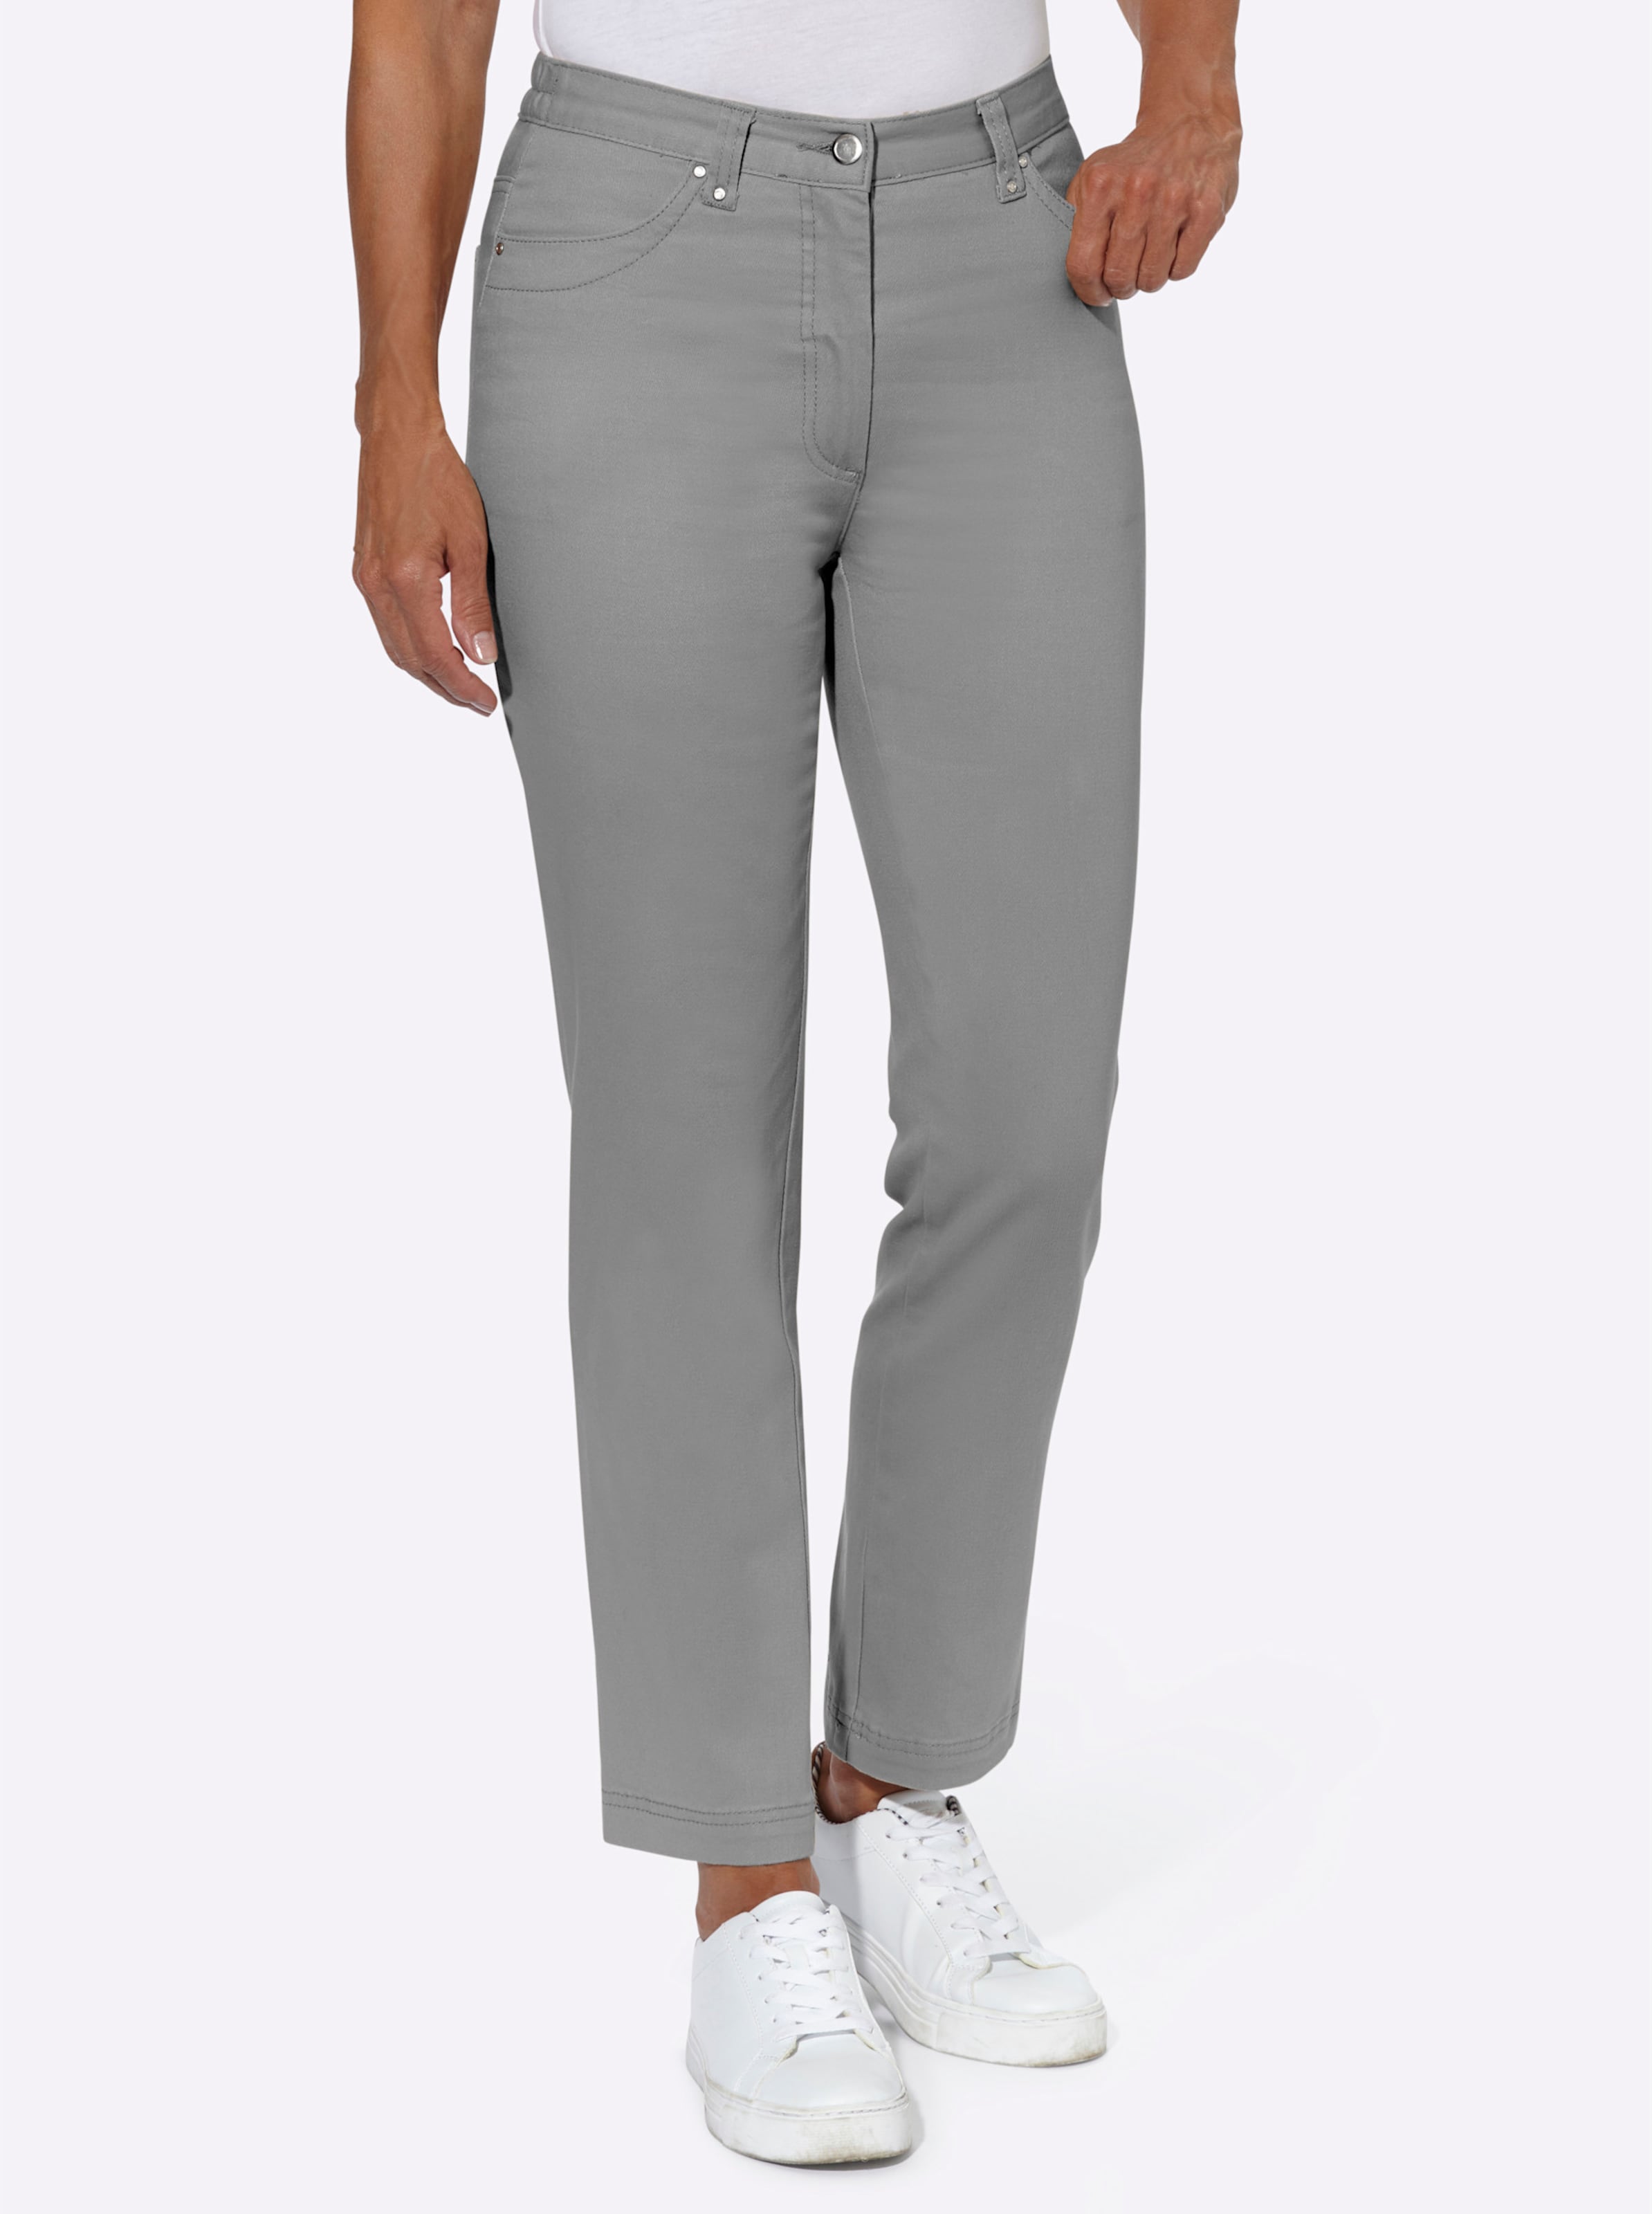 Witt Damen Stretch-Jeans, grau